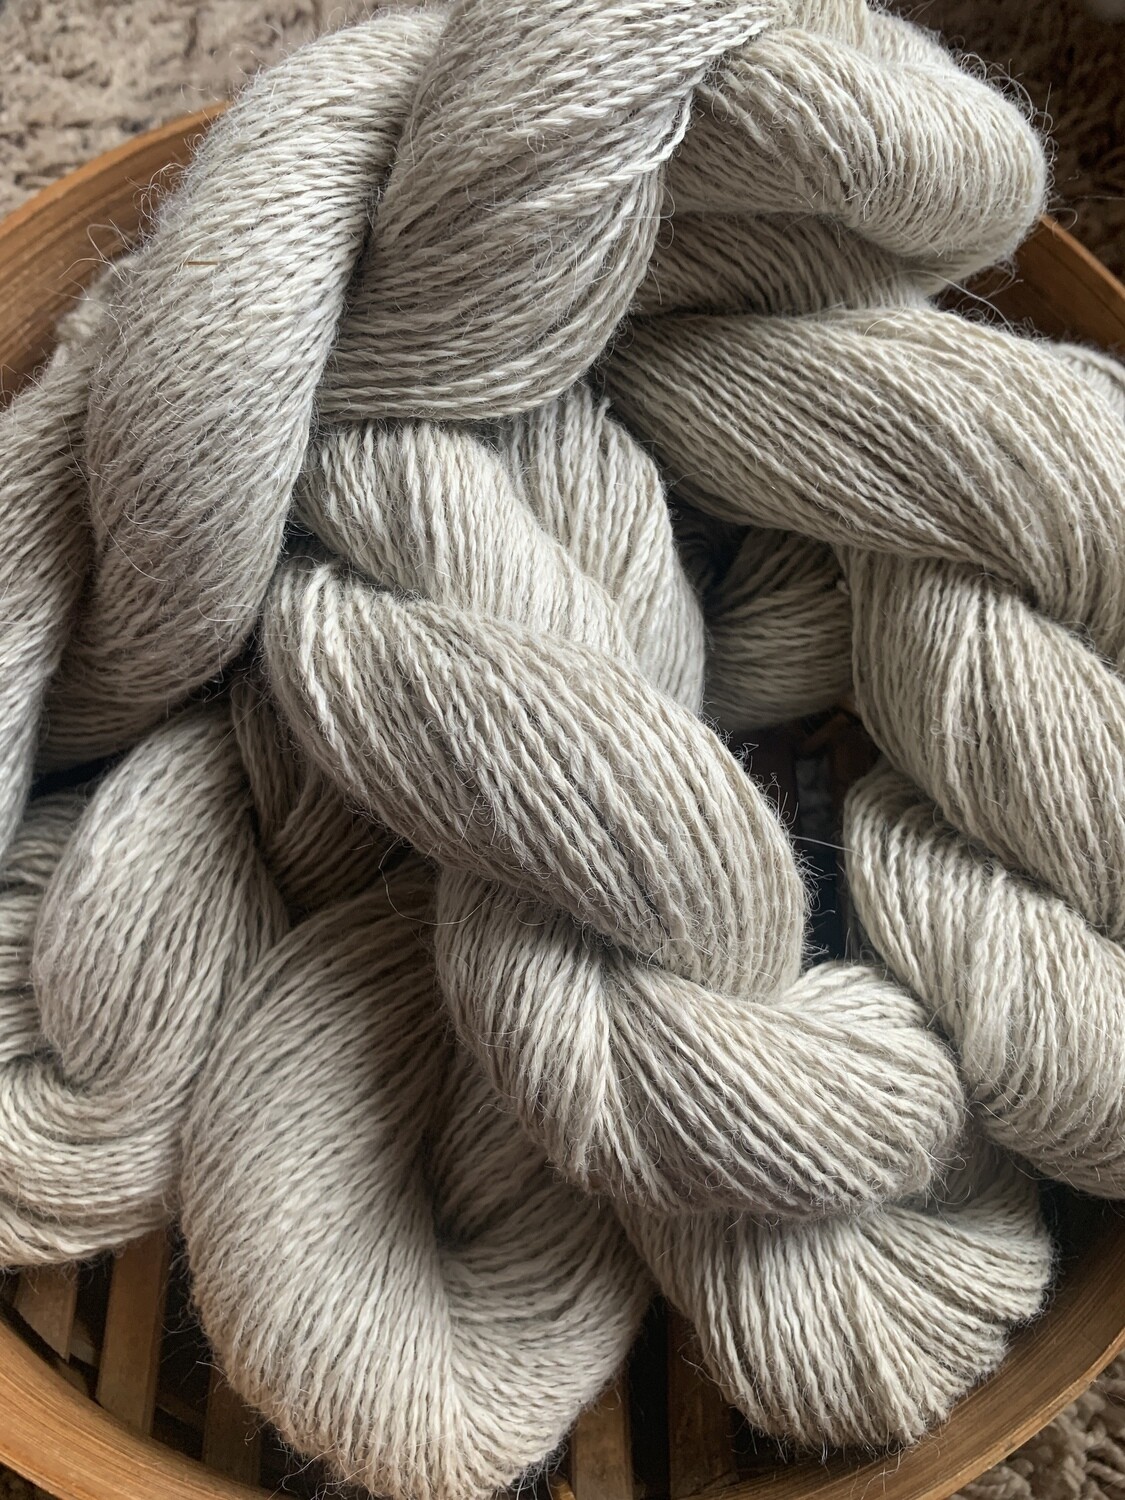 Suri Alpaca Yarn - Parchment